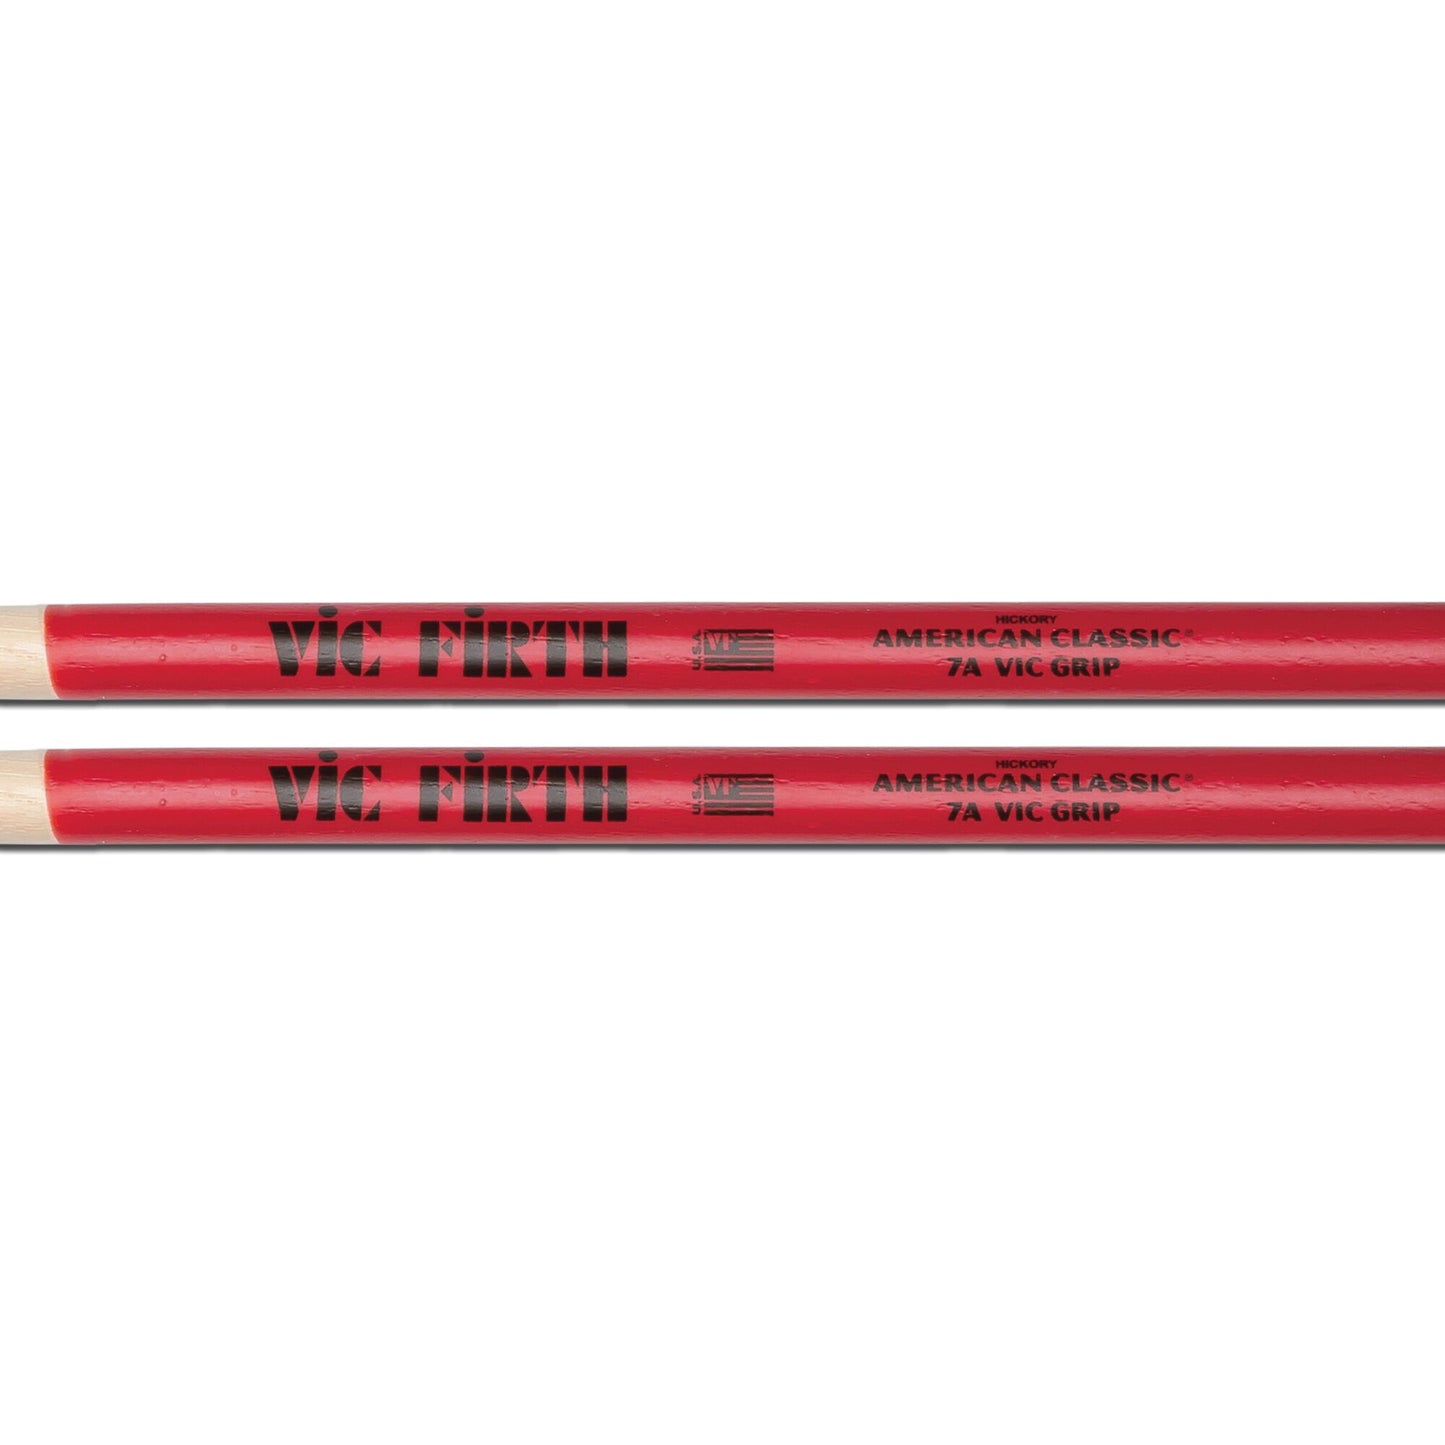 American Classic® 7A Vic Grip Drumsticks